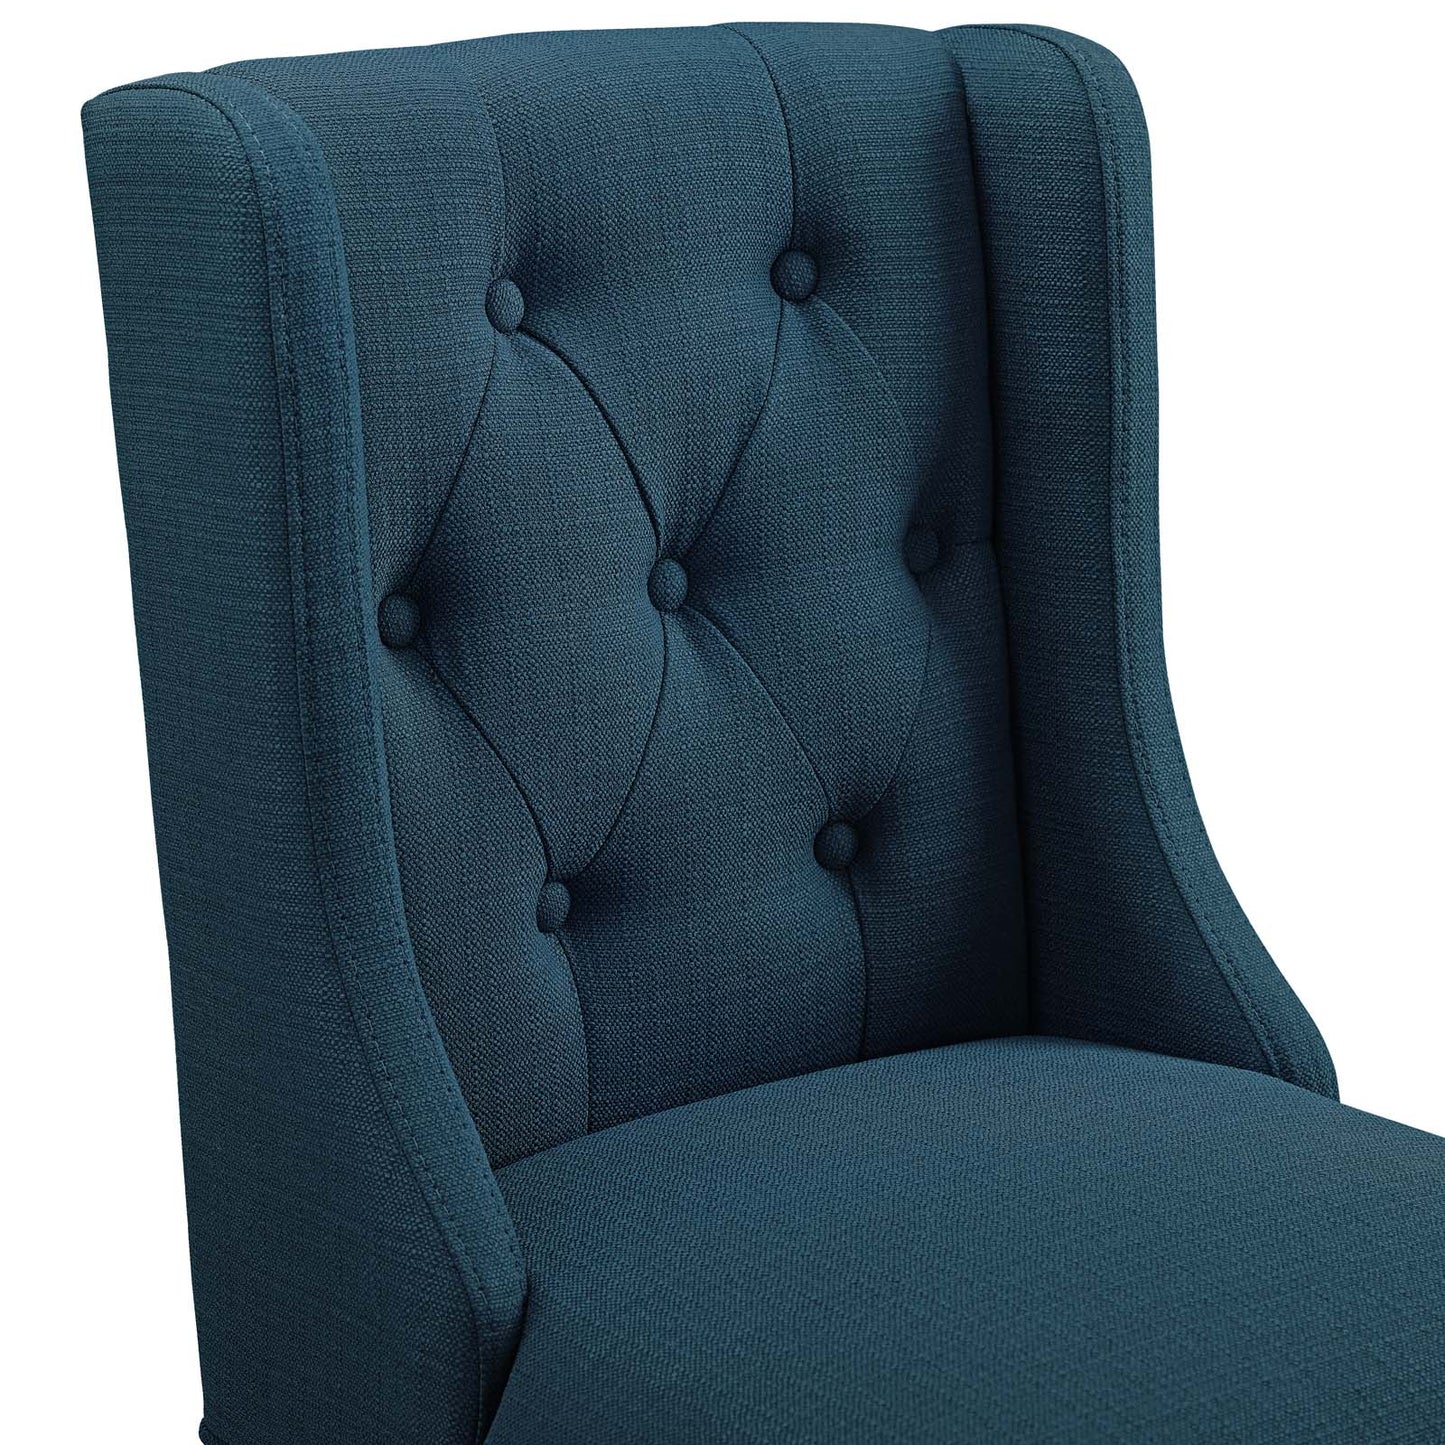 Baronet Counter Bar Stool Upholstered Fabric Set of 2 Azure EEI-4020-AZU